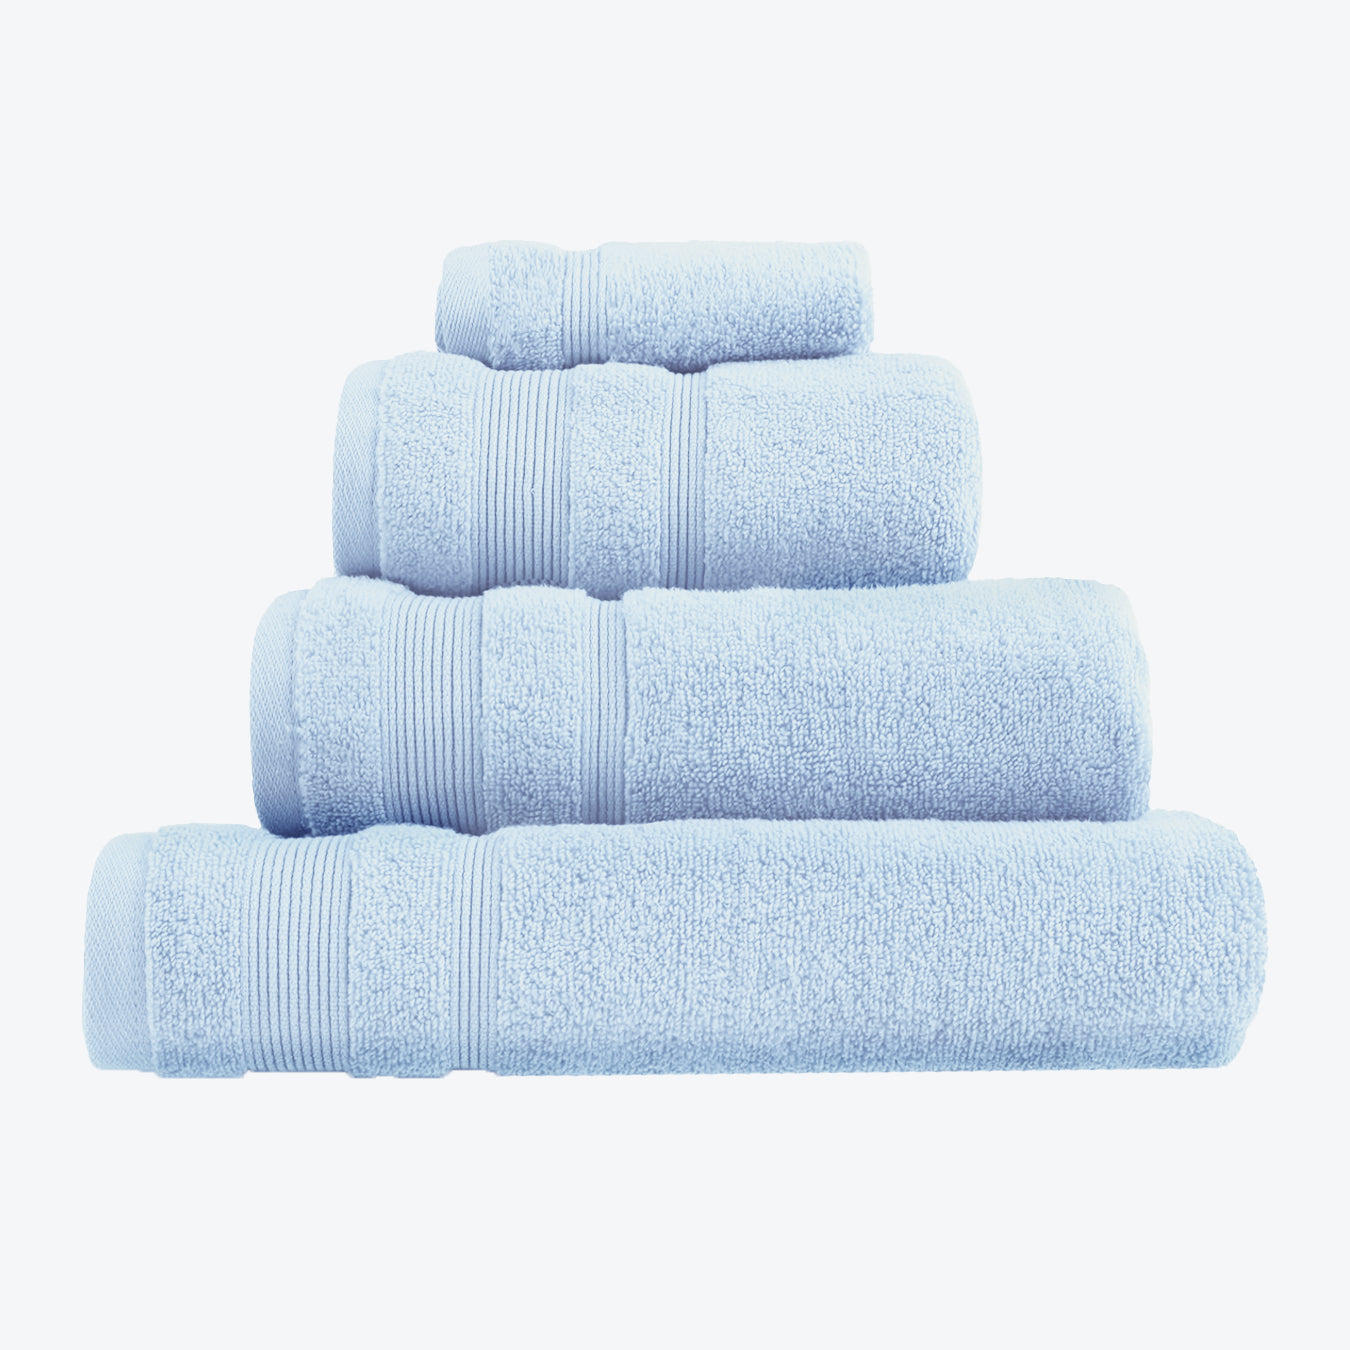 Baby Blue Egyptian Cotton Towel Bale Set - Premium Zero Twist Bathroom Towels (Hand Towel, Bath Towel, Bath Sheet, face Cloths).